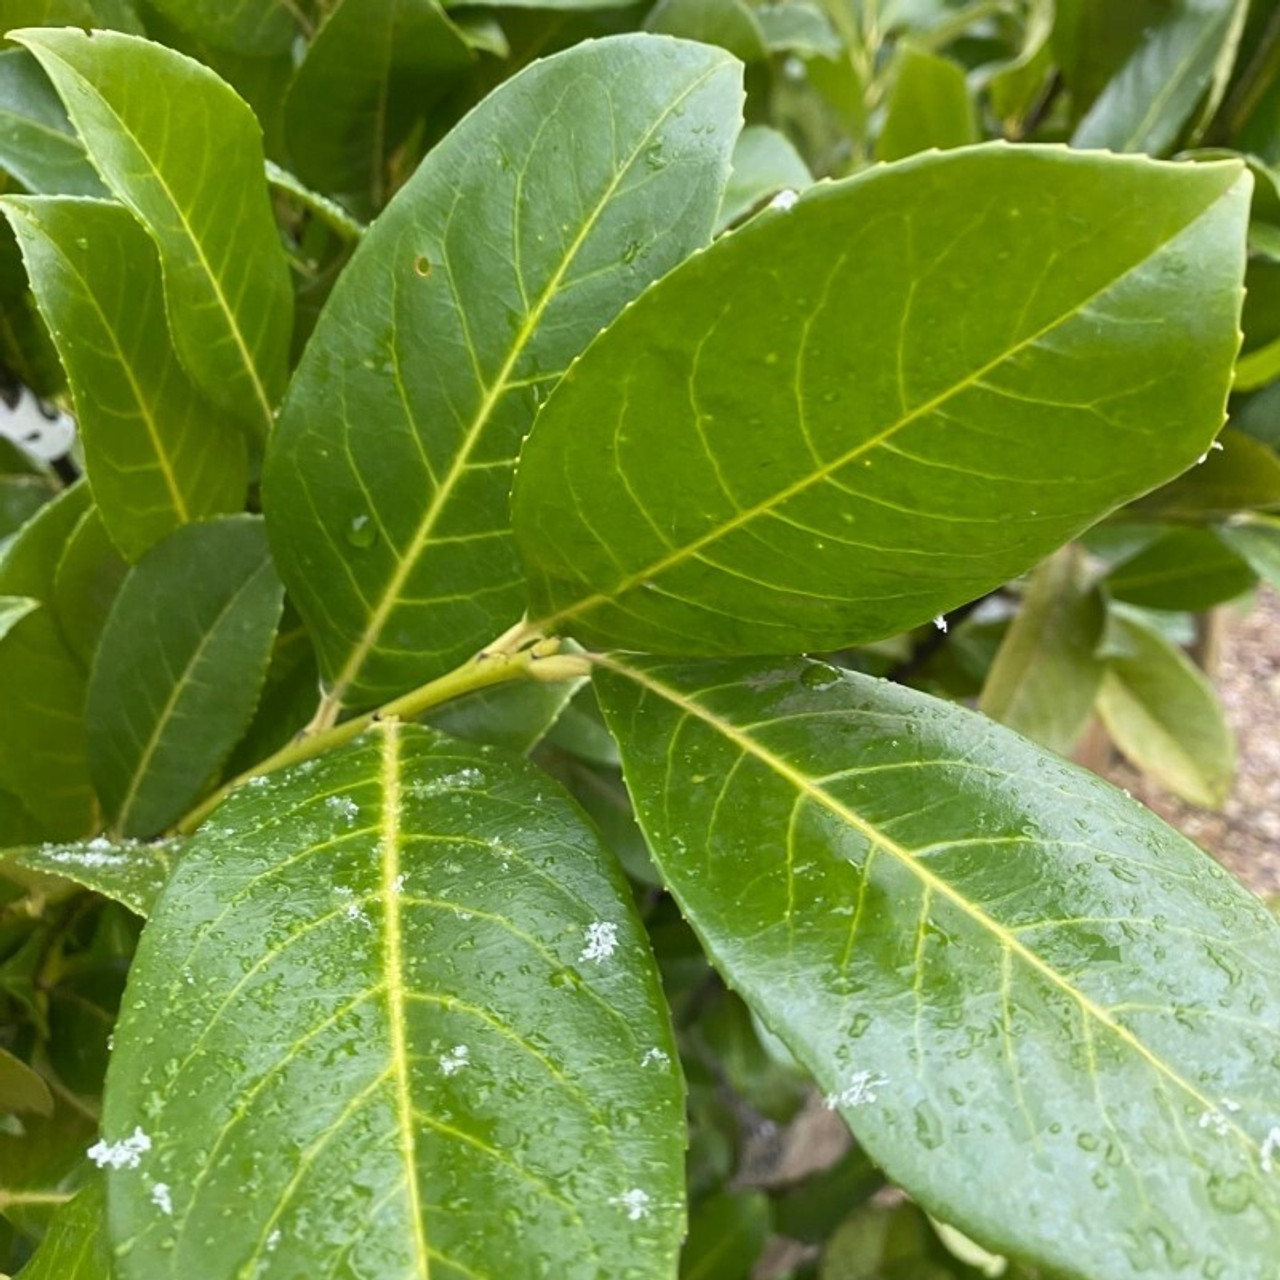 Prunus laurocerasus 'Rotundifolia'